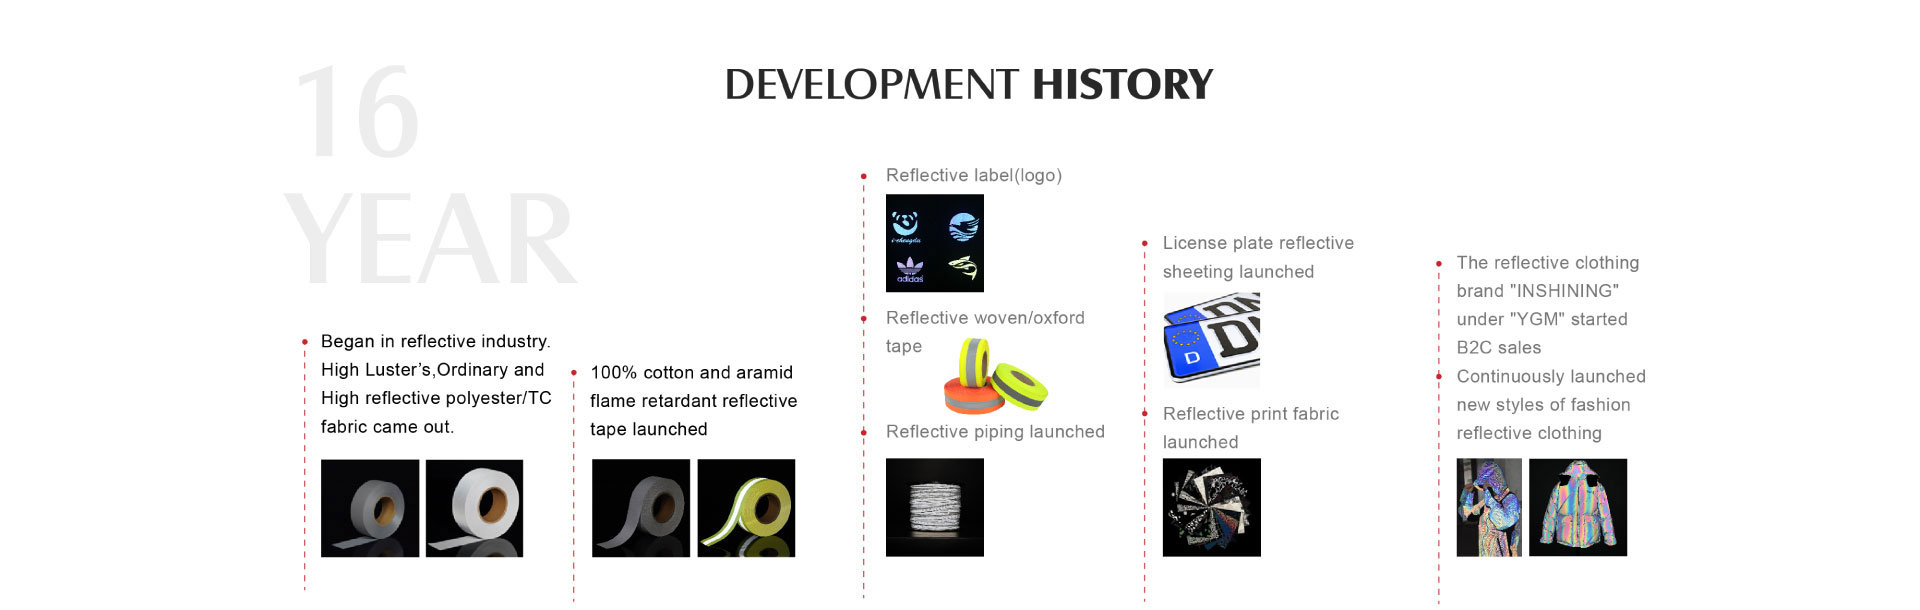 development history